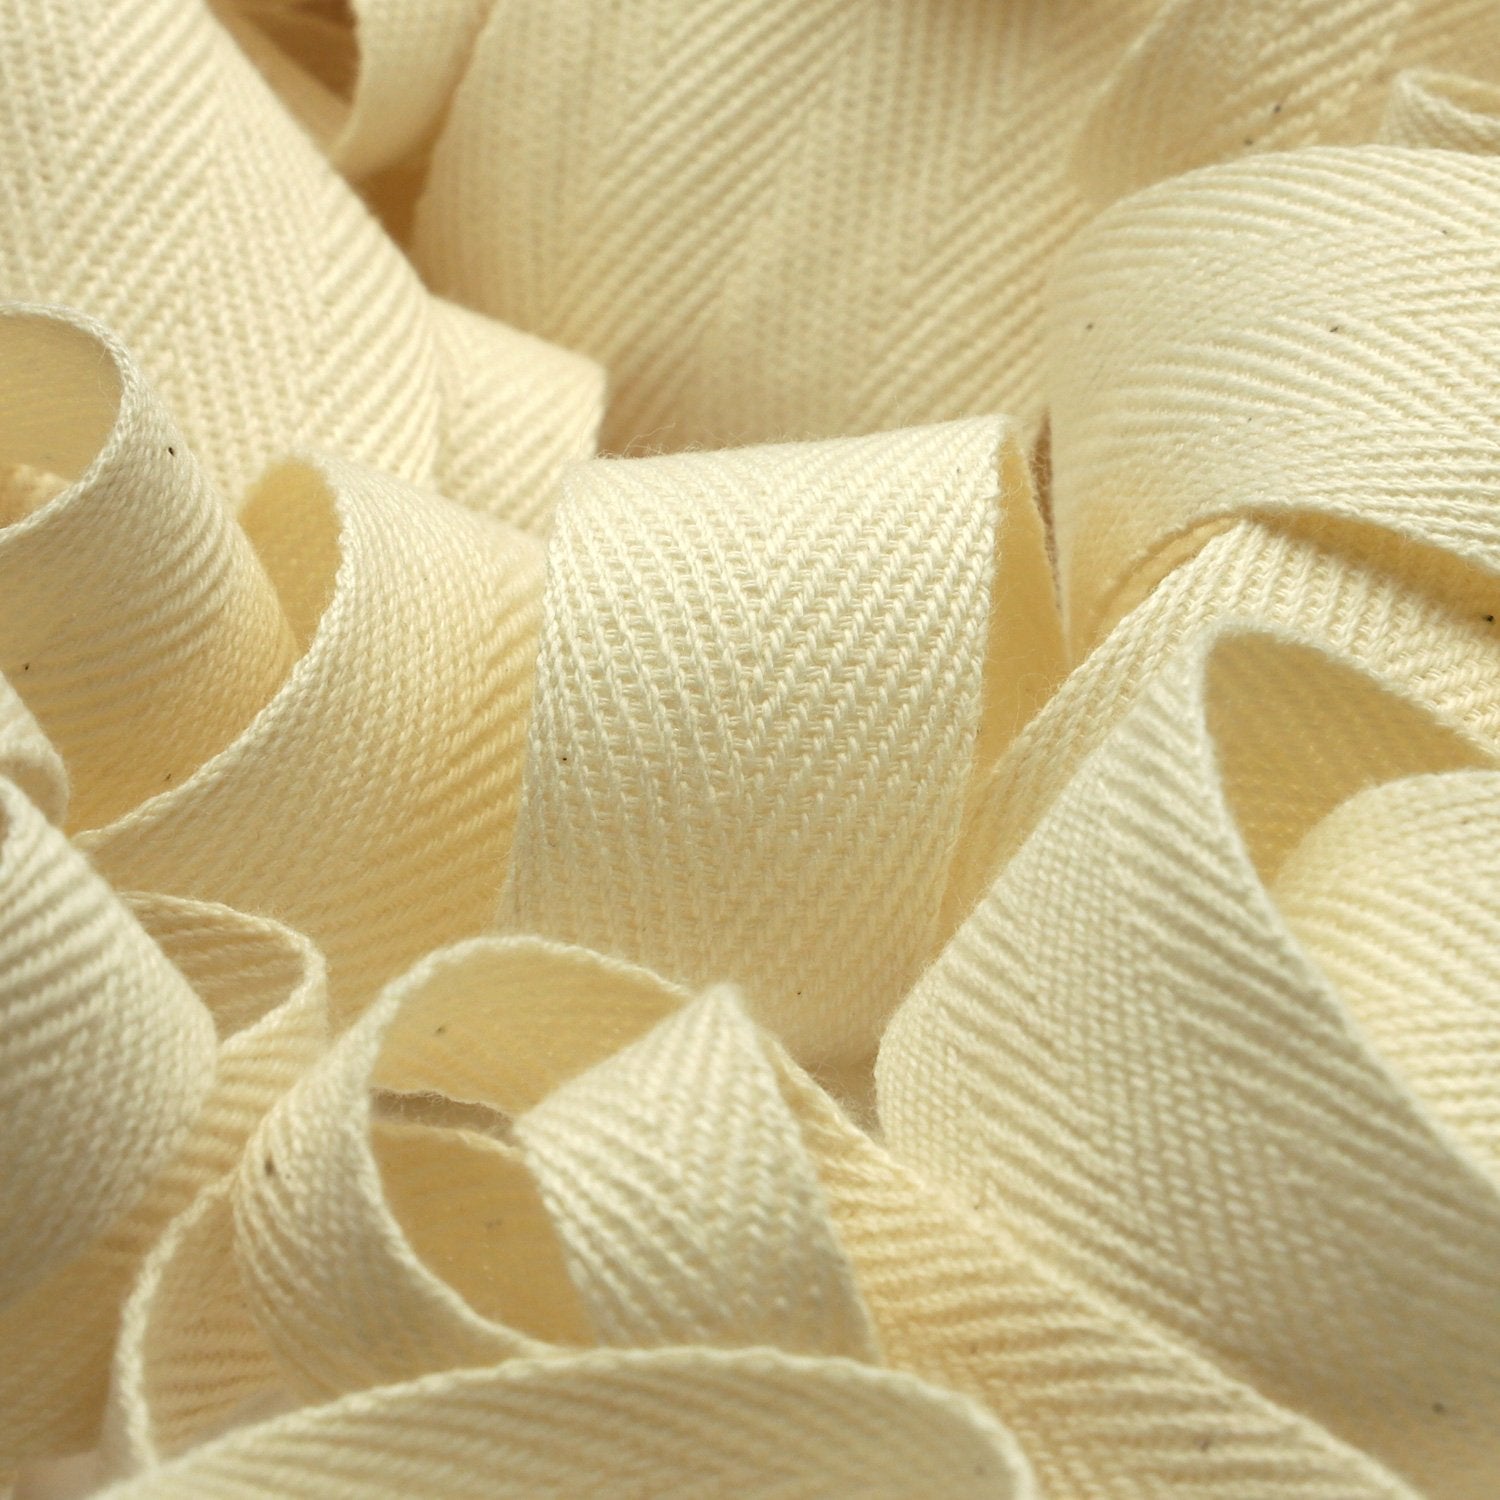 FUJIYAMA RIBBON Organic Cotton Herringbone Ribbon 20mm Ecru 9.14 Meters Roll